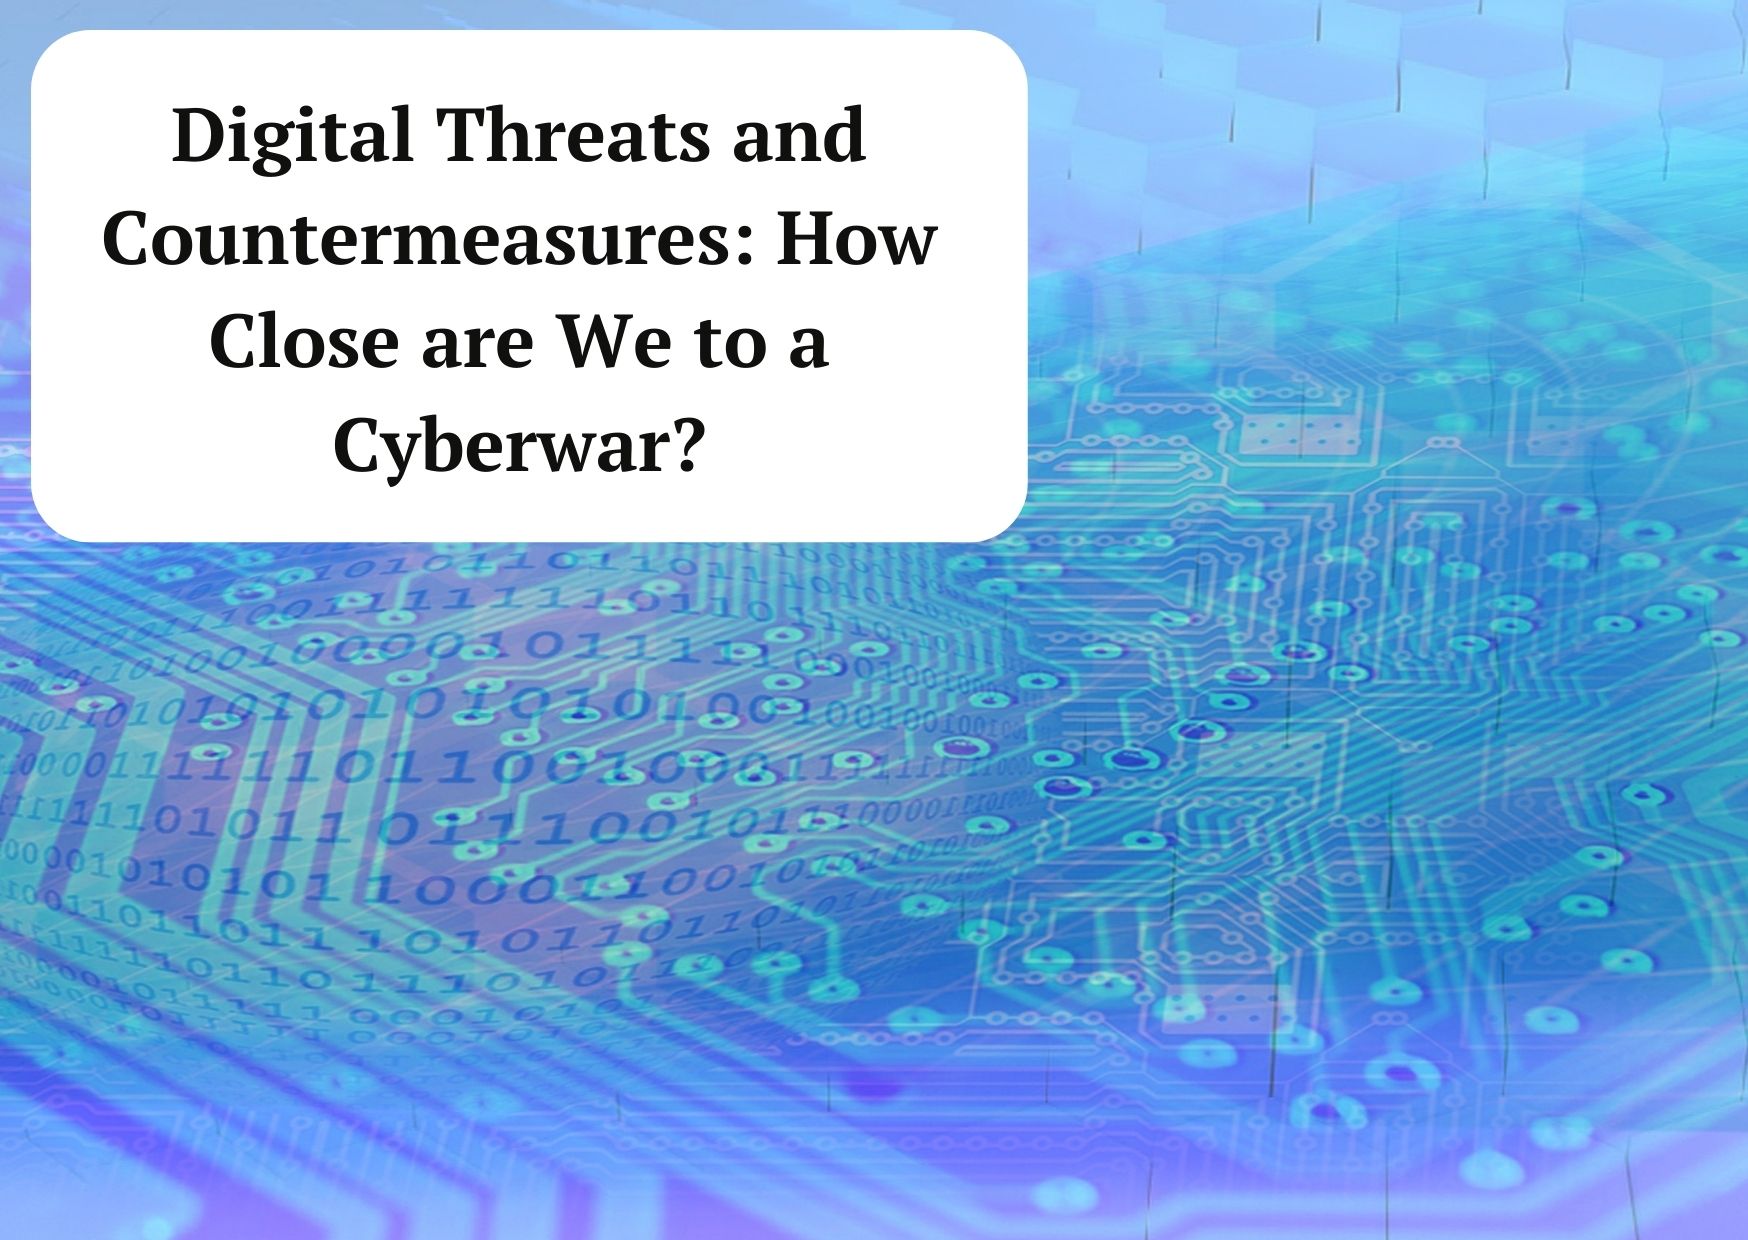 Digital Threats and Countermeasures: How Shut are We to a Cyberwar?